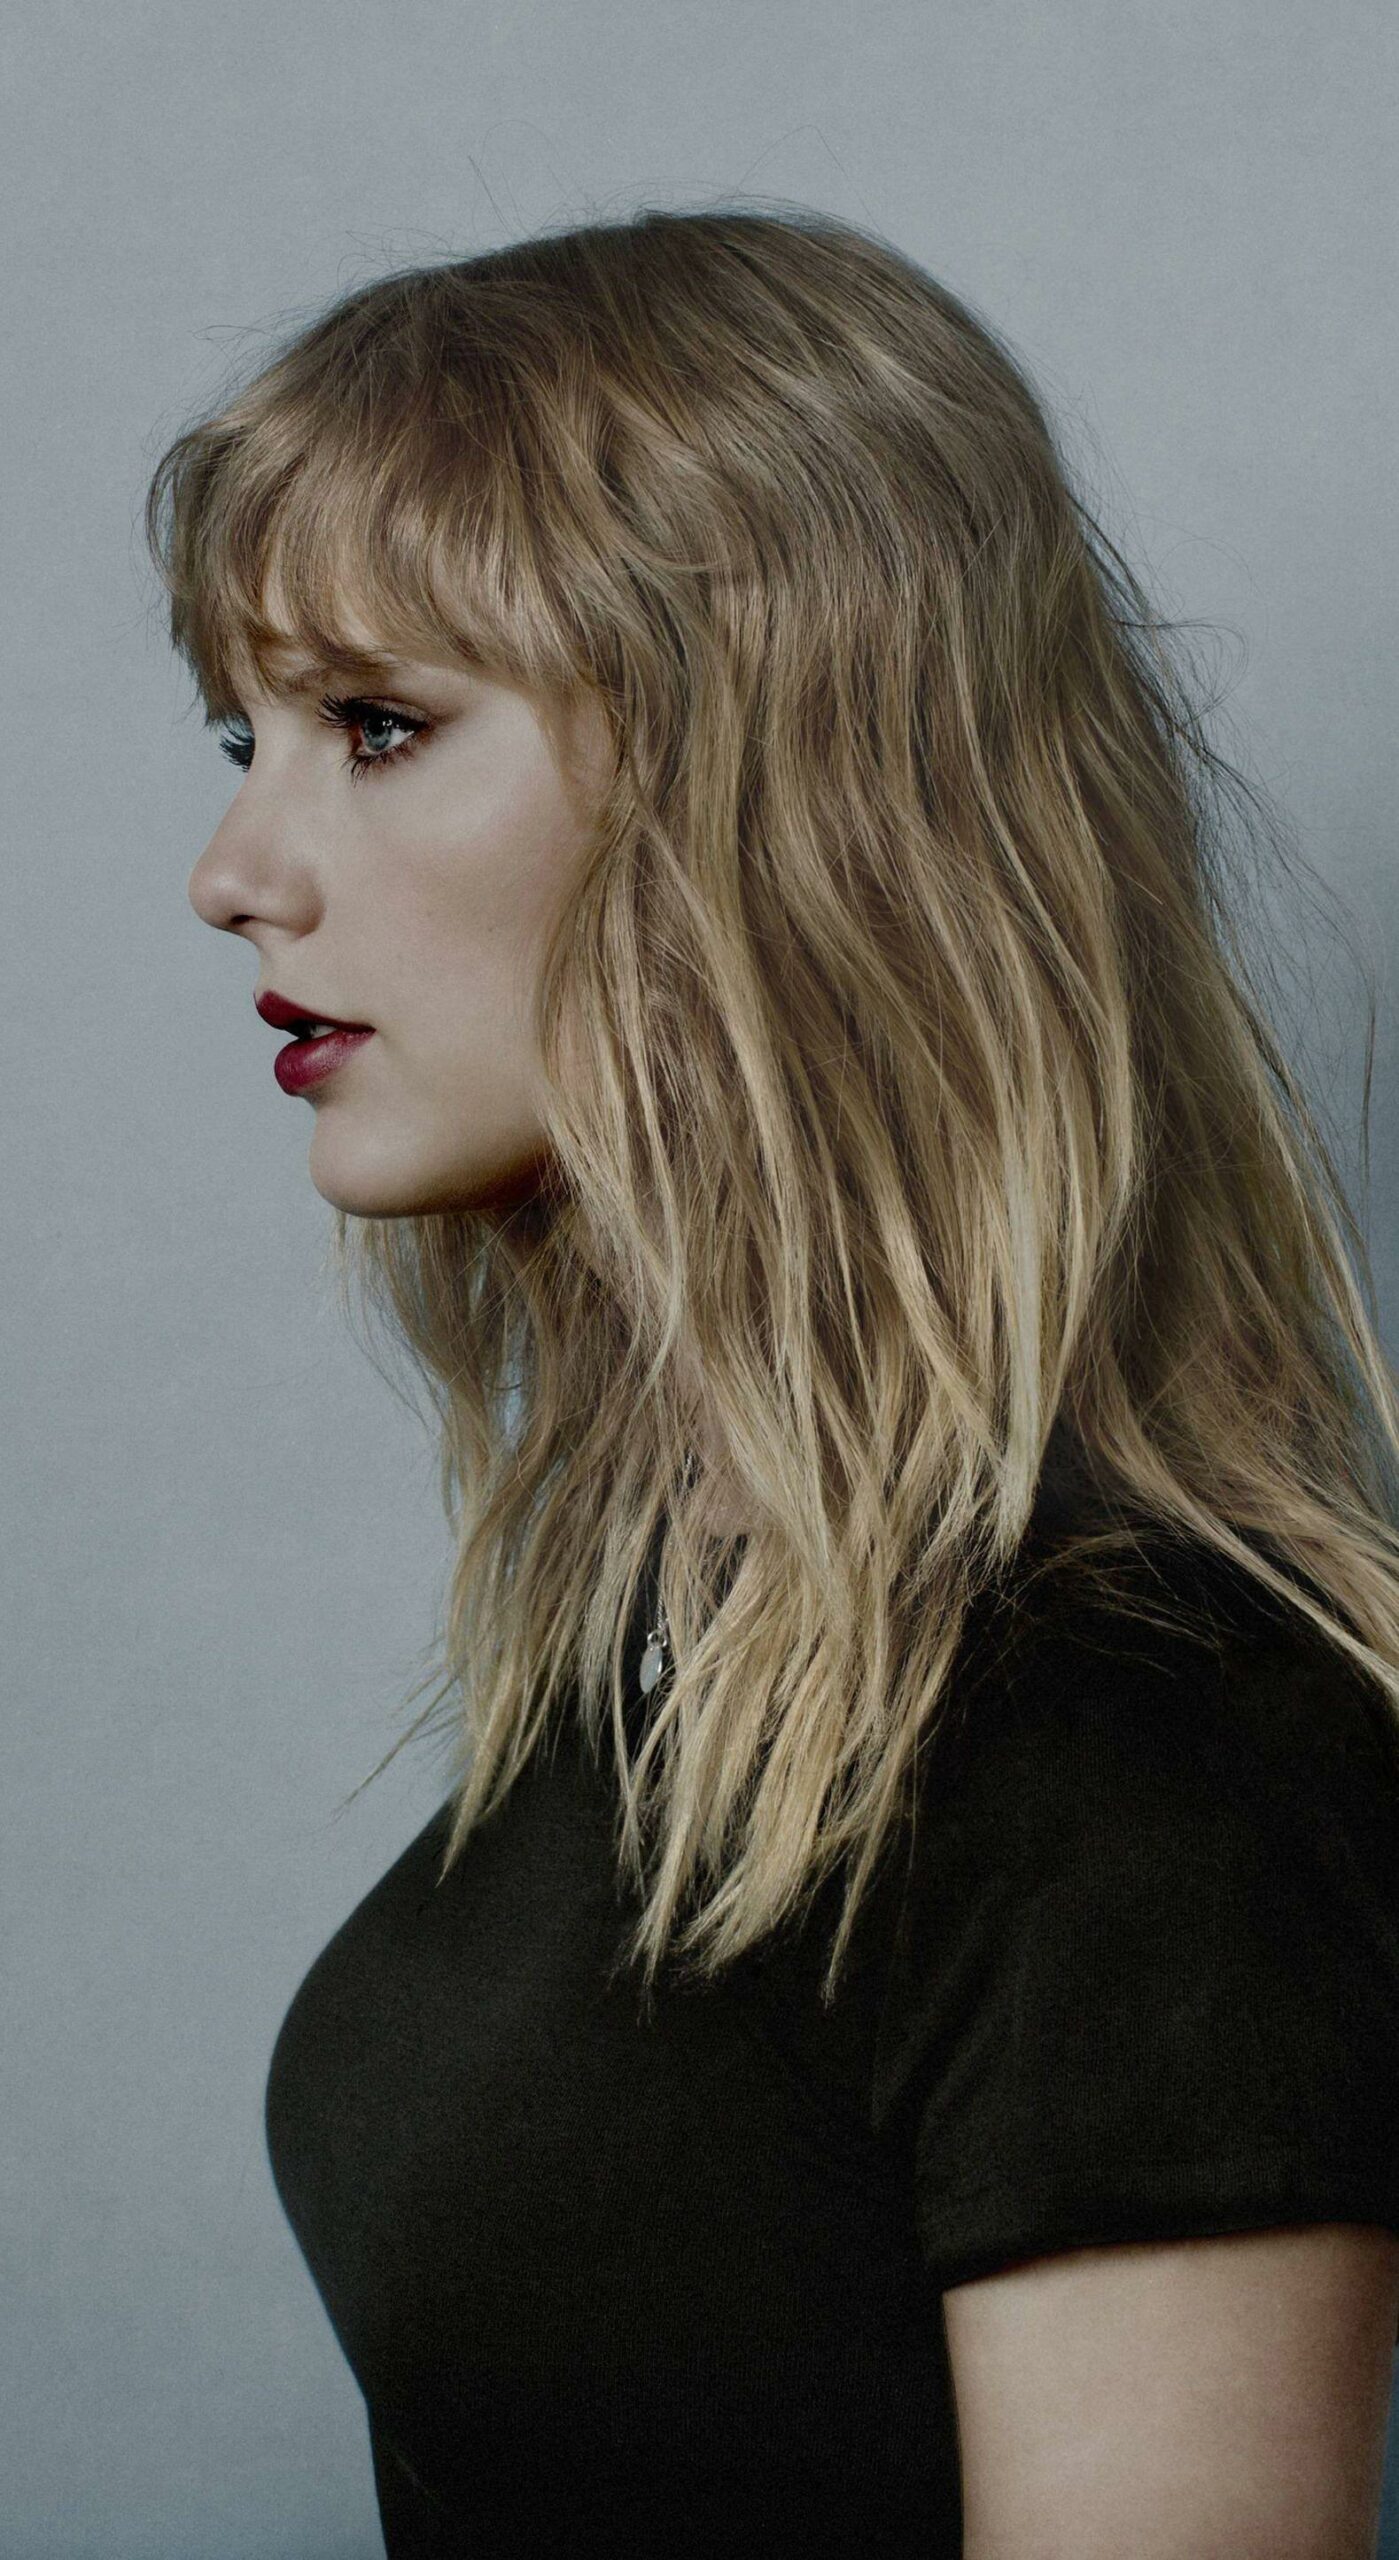 Taylor Swift Net Worth 2022: 5 Year Legal Battle Over 'Shake It Off' Financial Blog